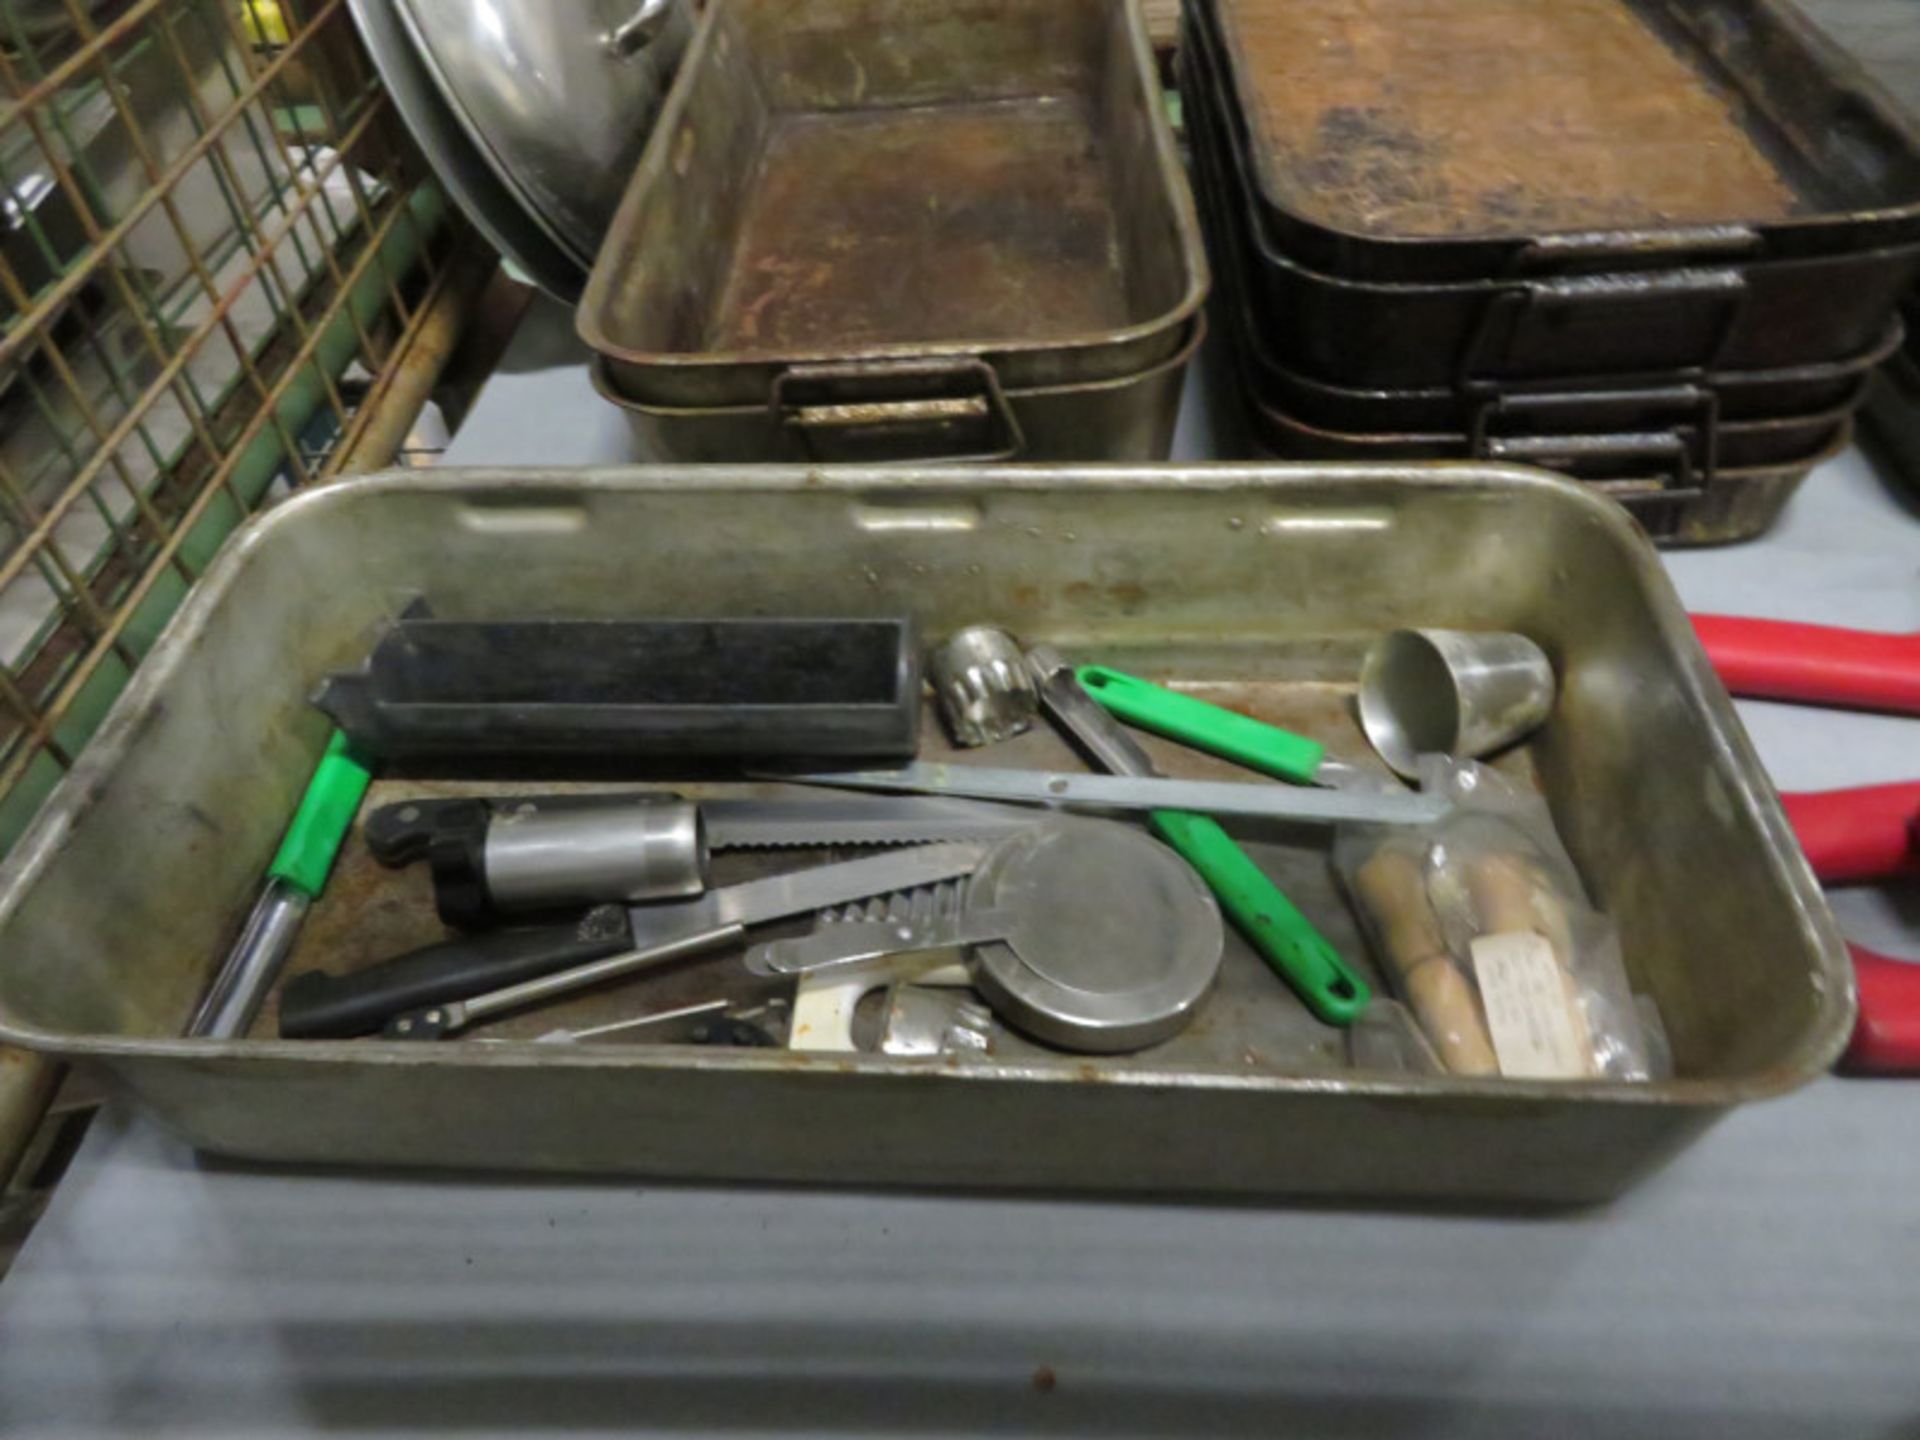 Cooking trays, pan lids, utensils - Image 3 of 4